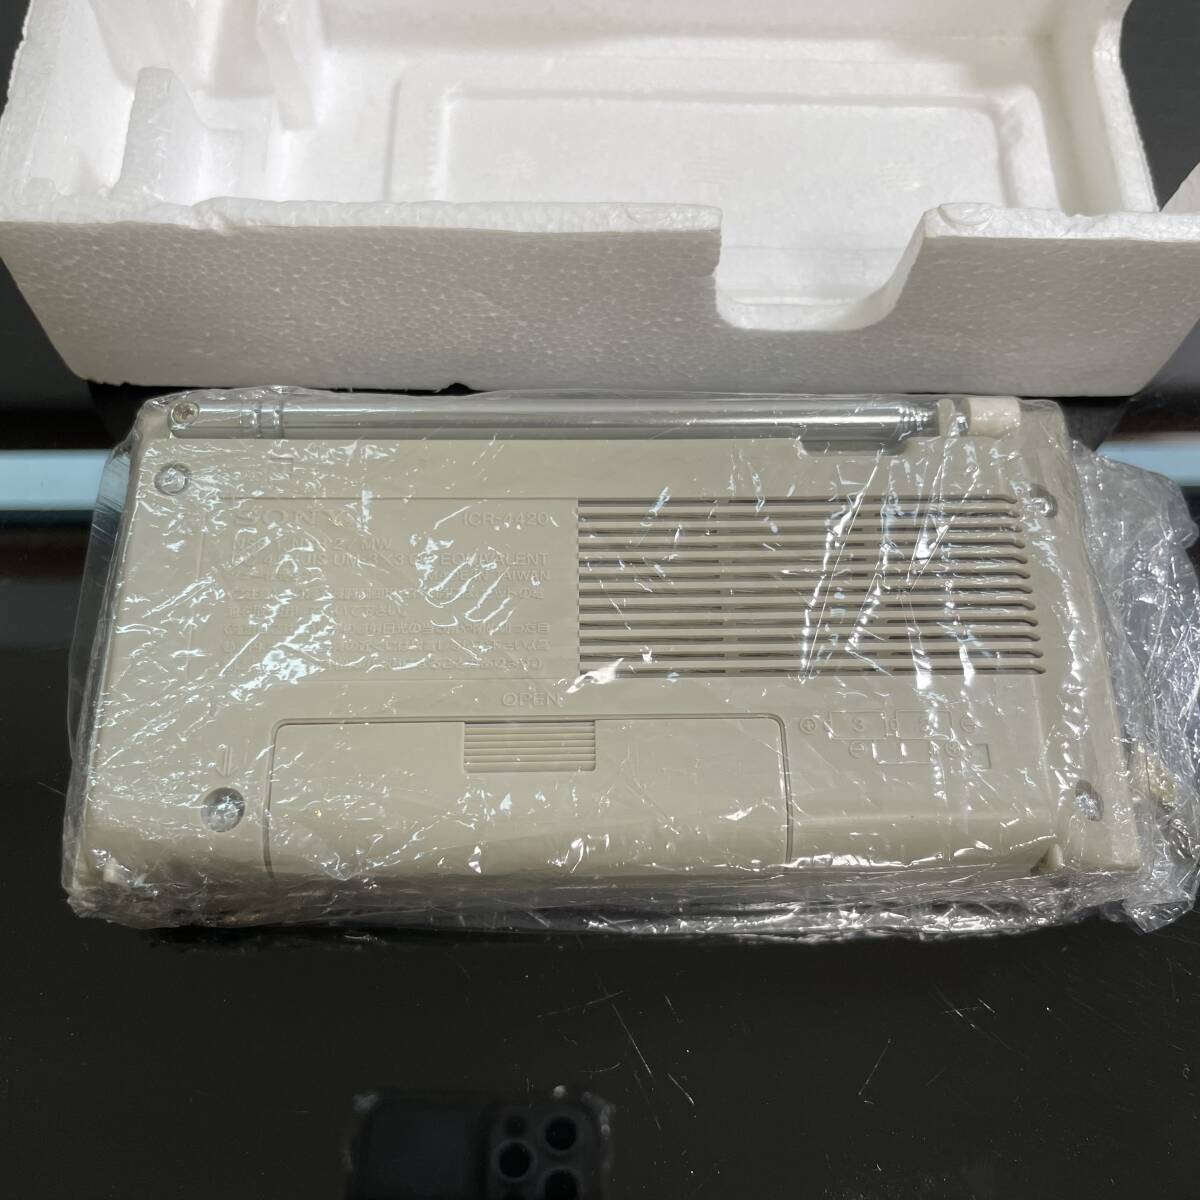 SONYトランジスタラジオ ICR-4420 外箱、取扱説明書付きの画像3